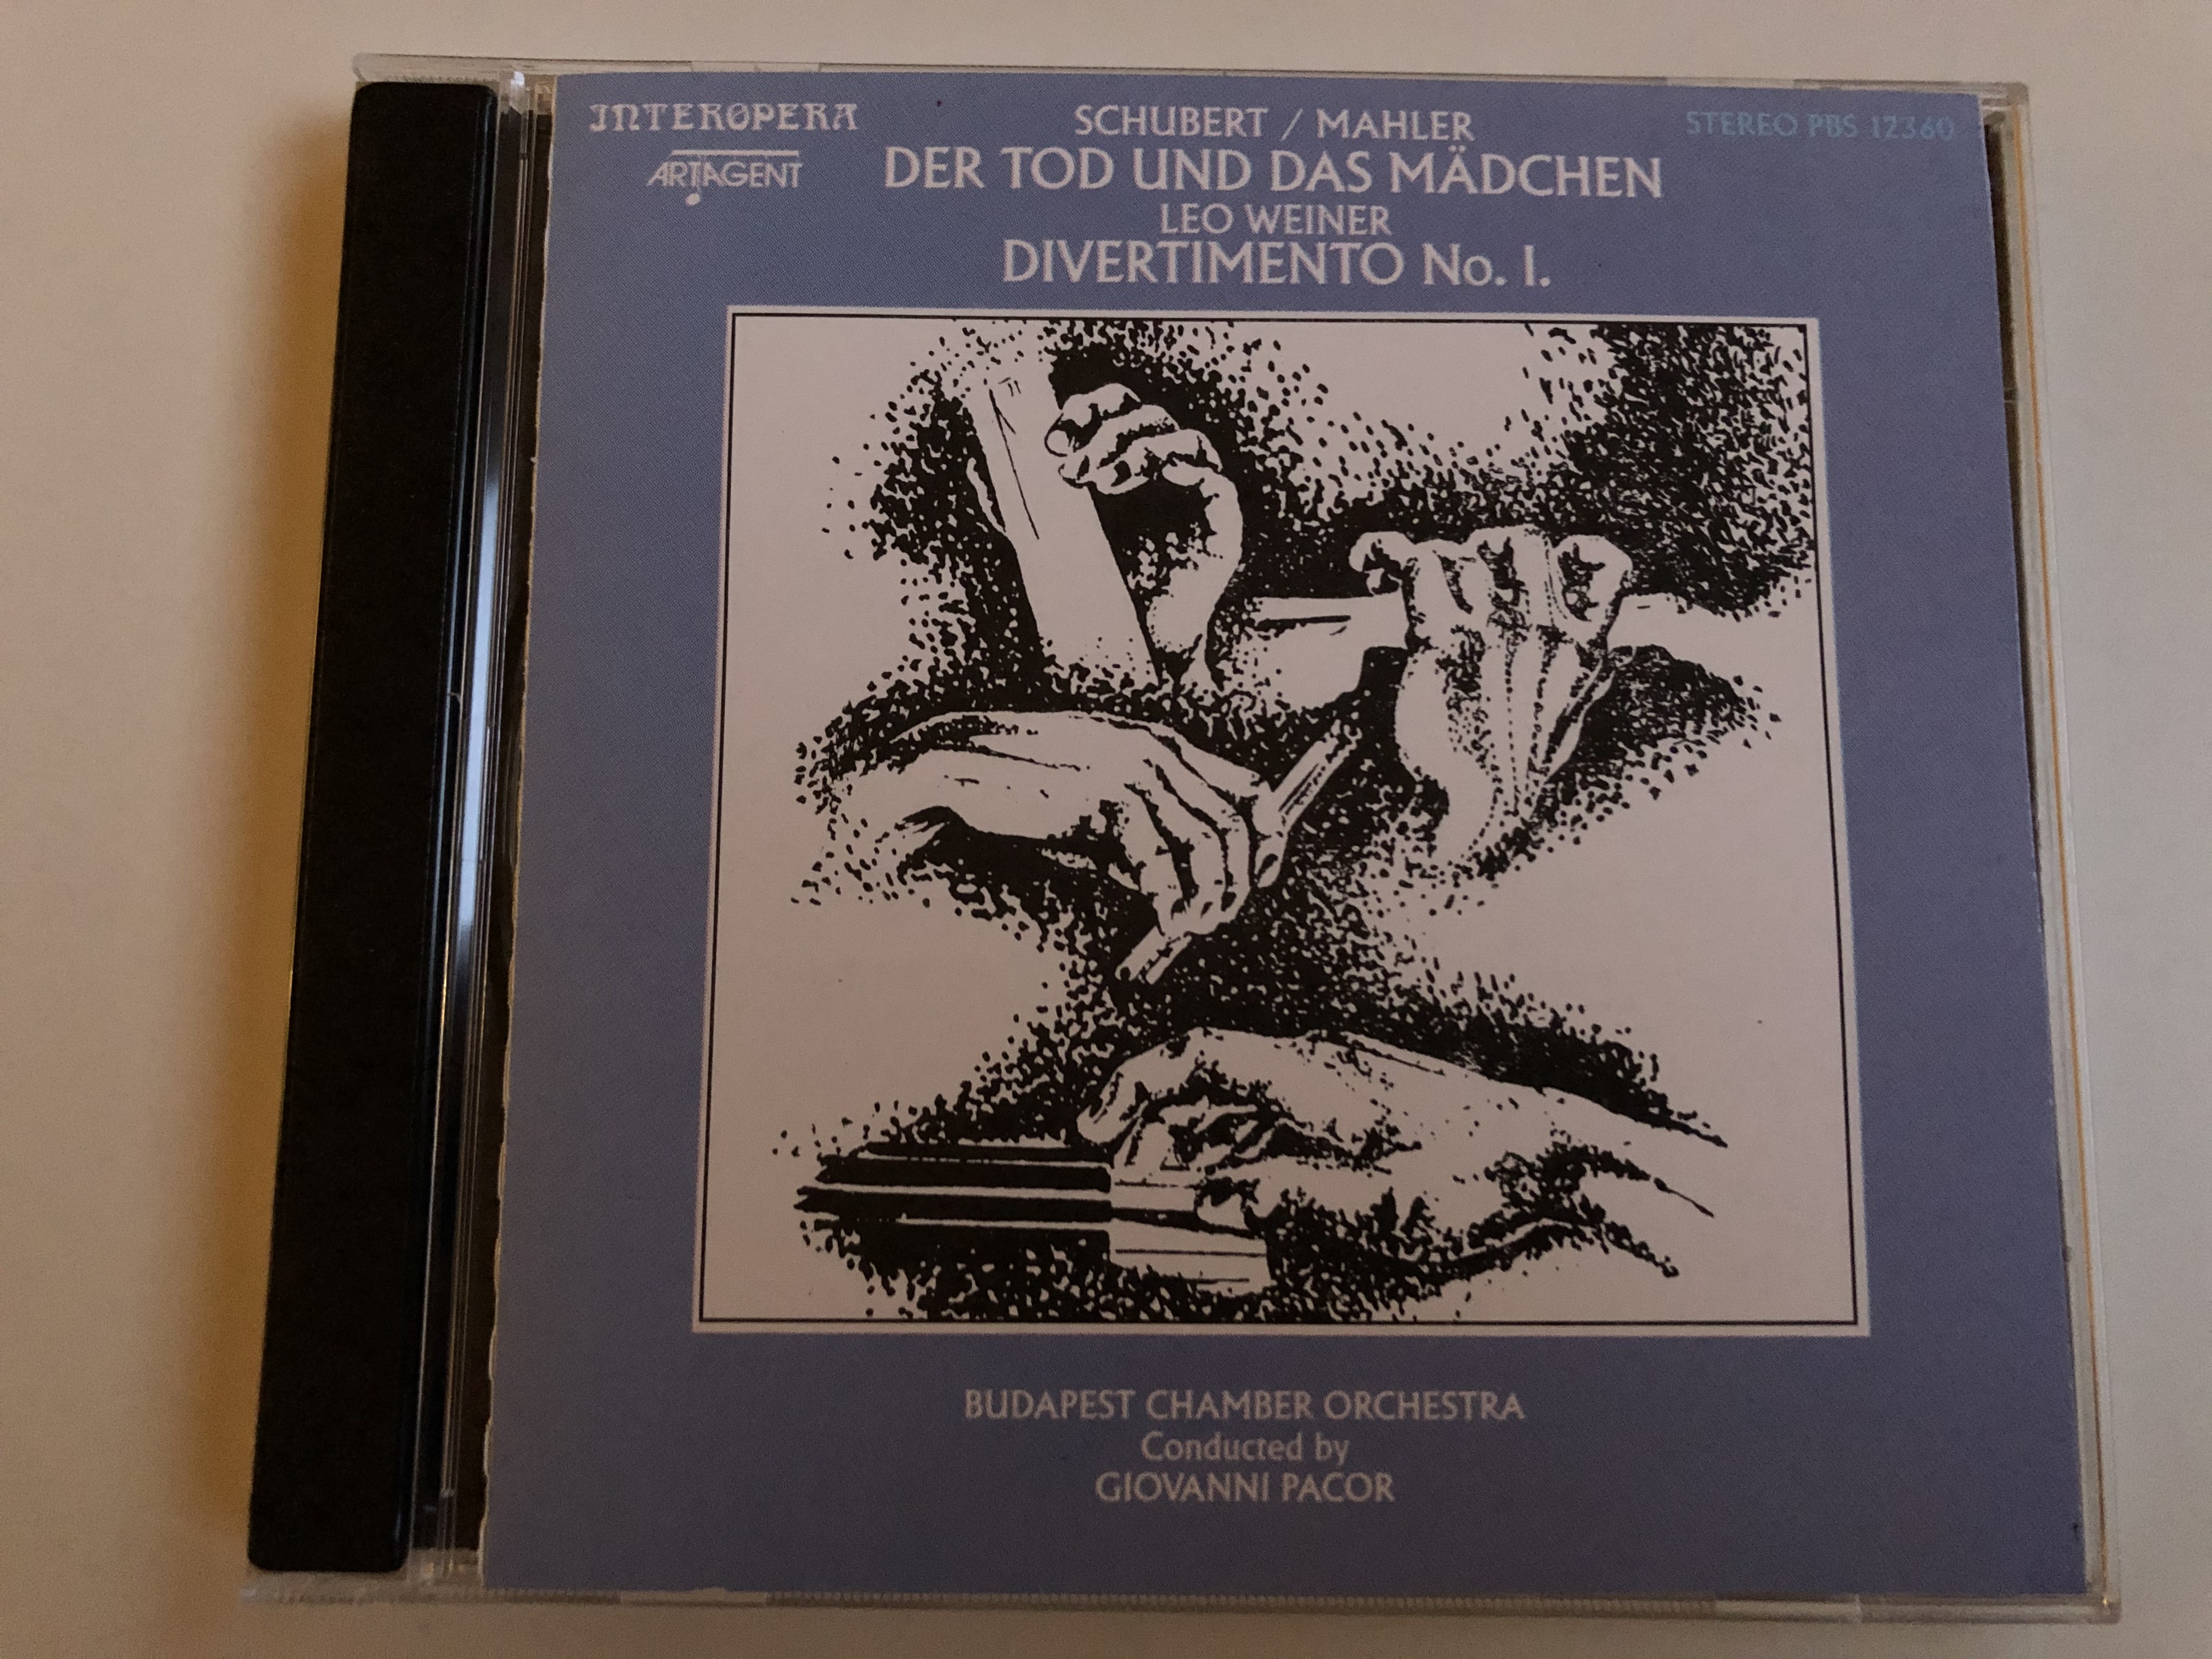 schubert-mahler-der-tod-und-das-madchen-leo-weiner-divertimento-no.-1.-budapest-chamber-orchestra-conducted-giovanni-pacor-gloria-audio-cd-1990-stereo-pbs-12360-1-.jpg